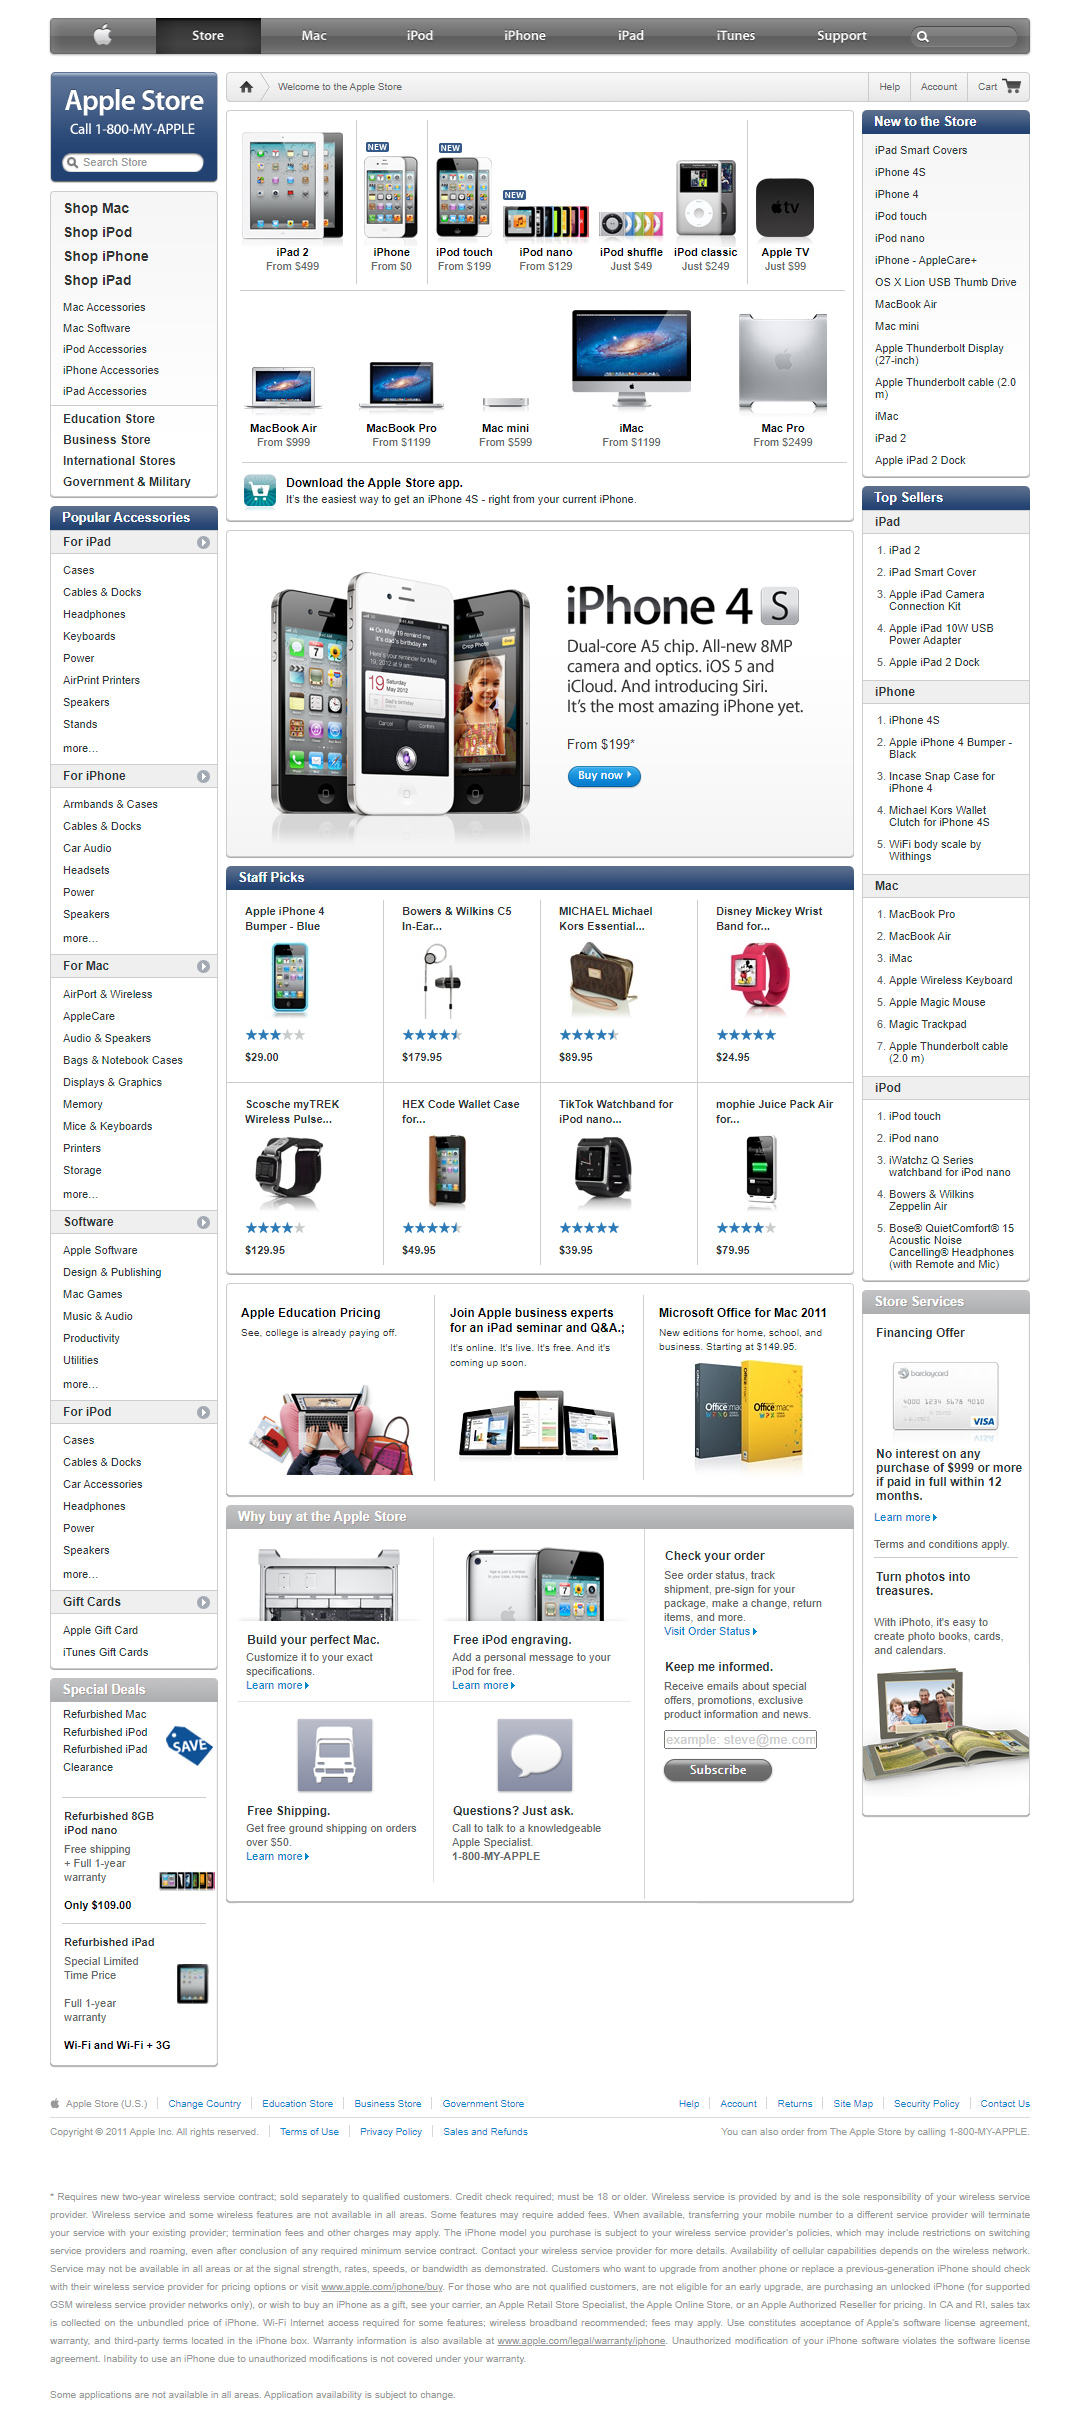 Apple Store website in 2011